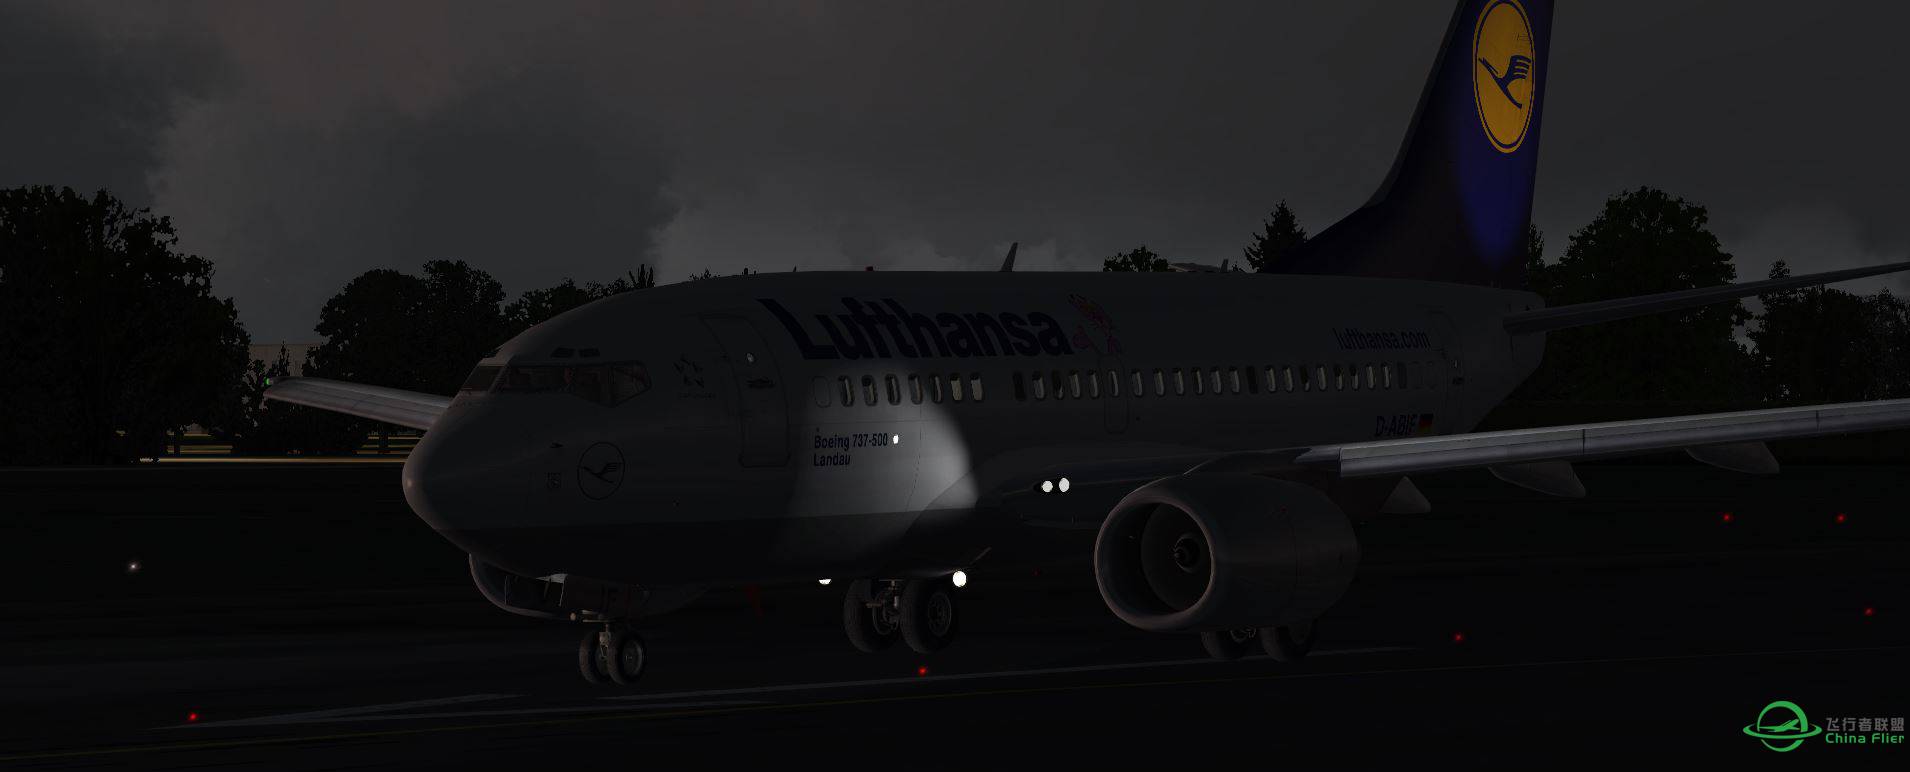 B737 Lufthansa-2178 